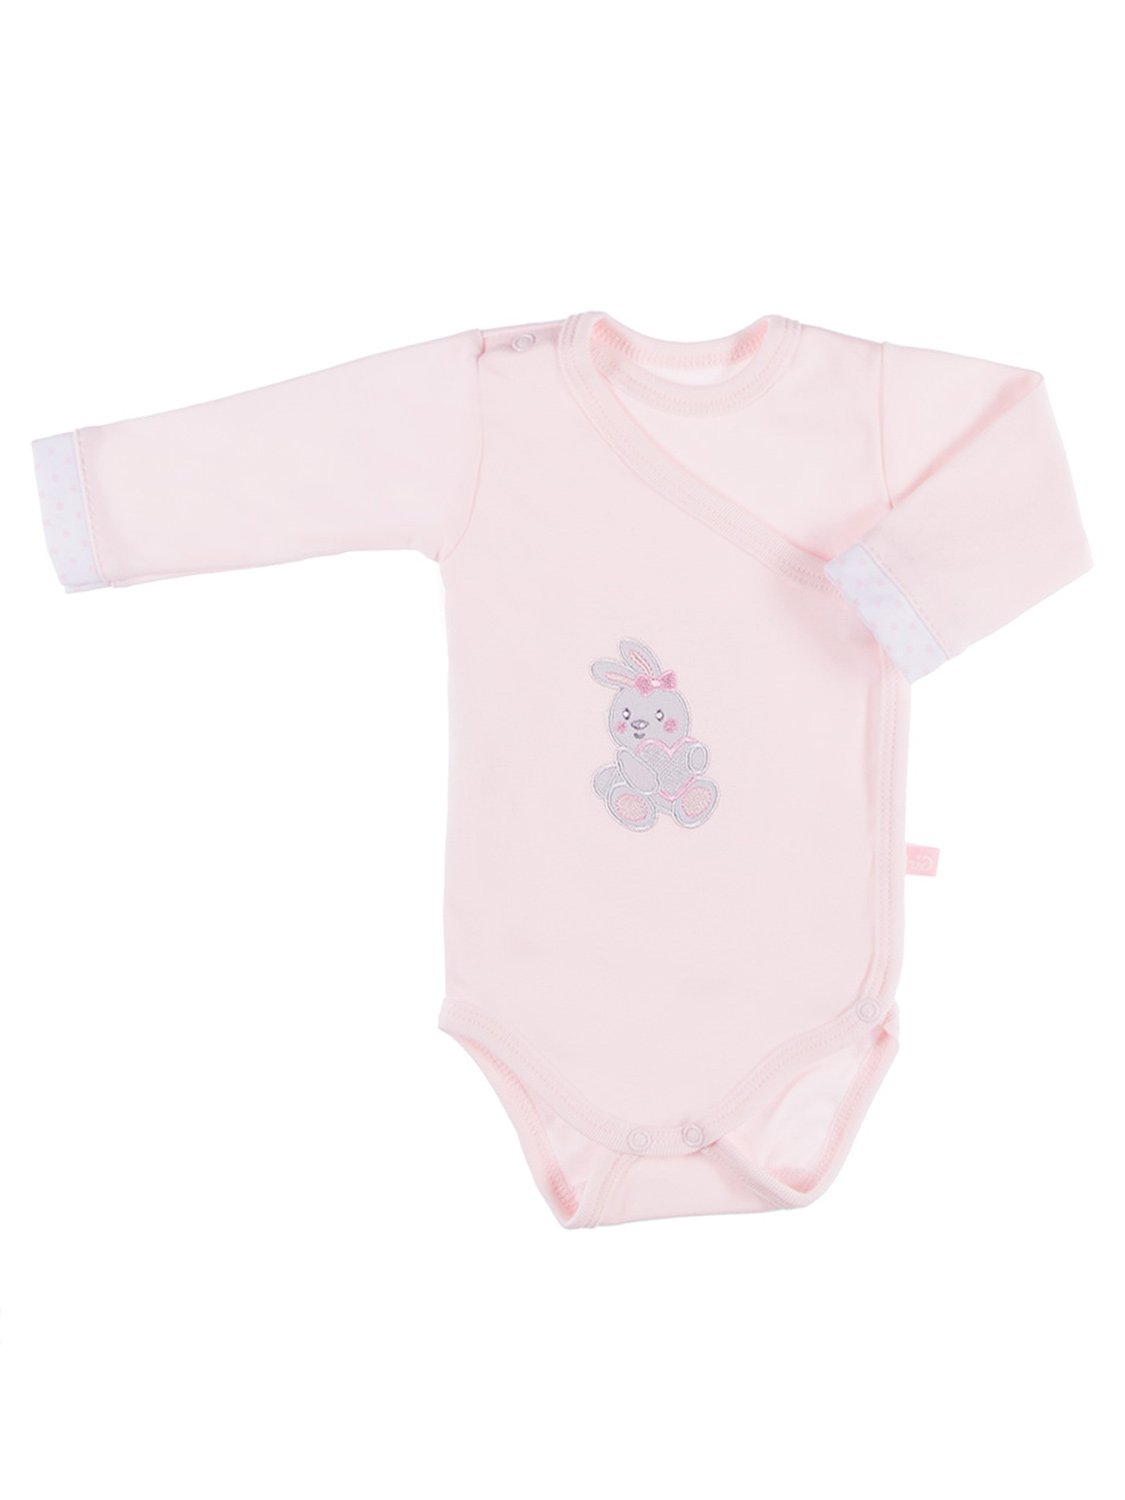 Early Baby Bodysuit, Embroidered Bunny Rabbit Design - Pink Bodysuit / Vest EEVI 